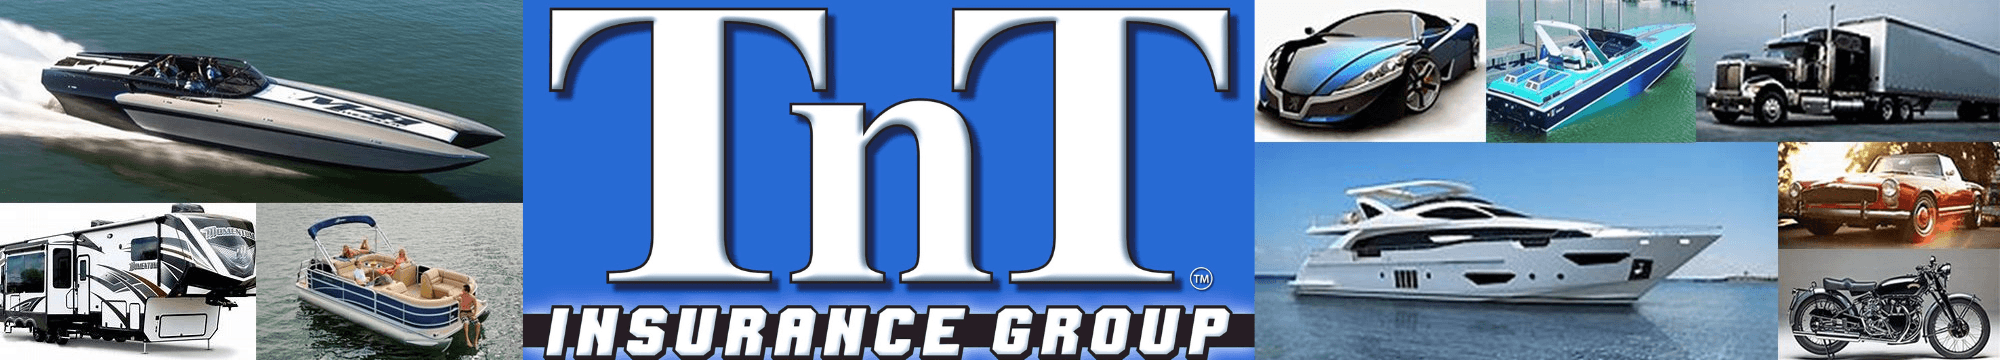 TnT Insurance Group